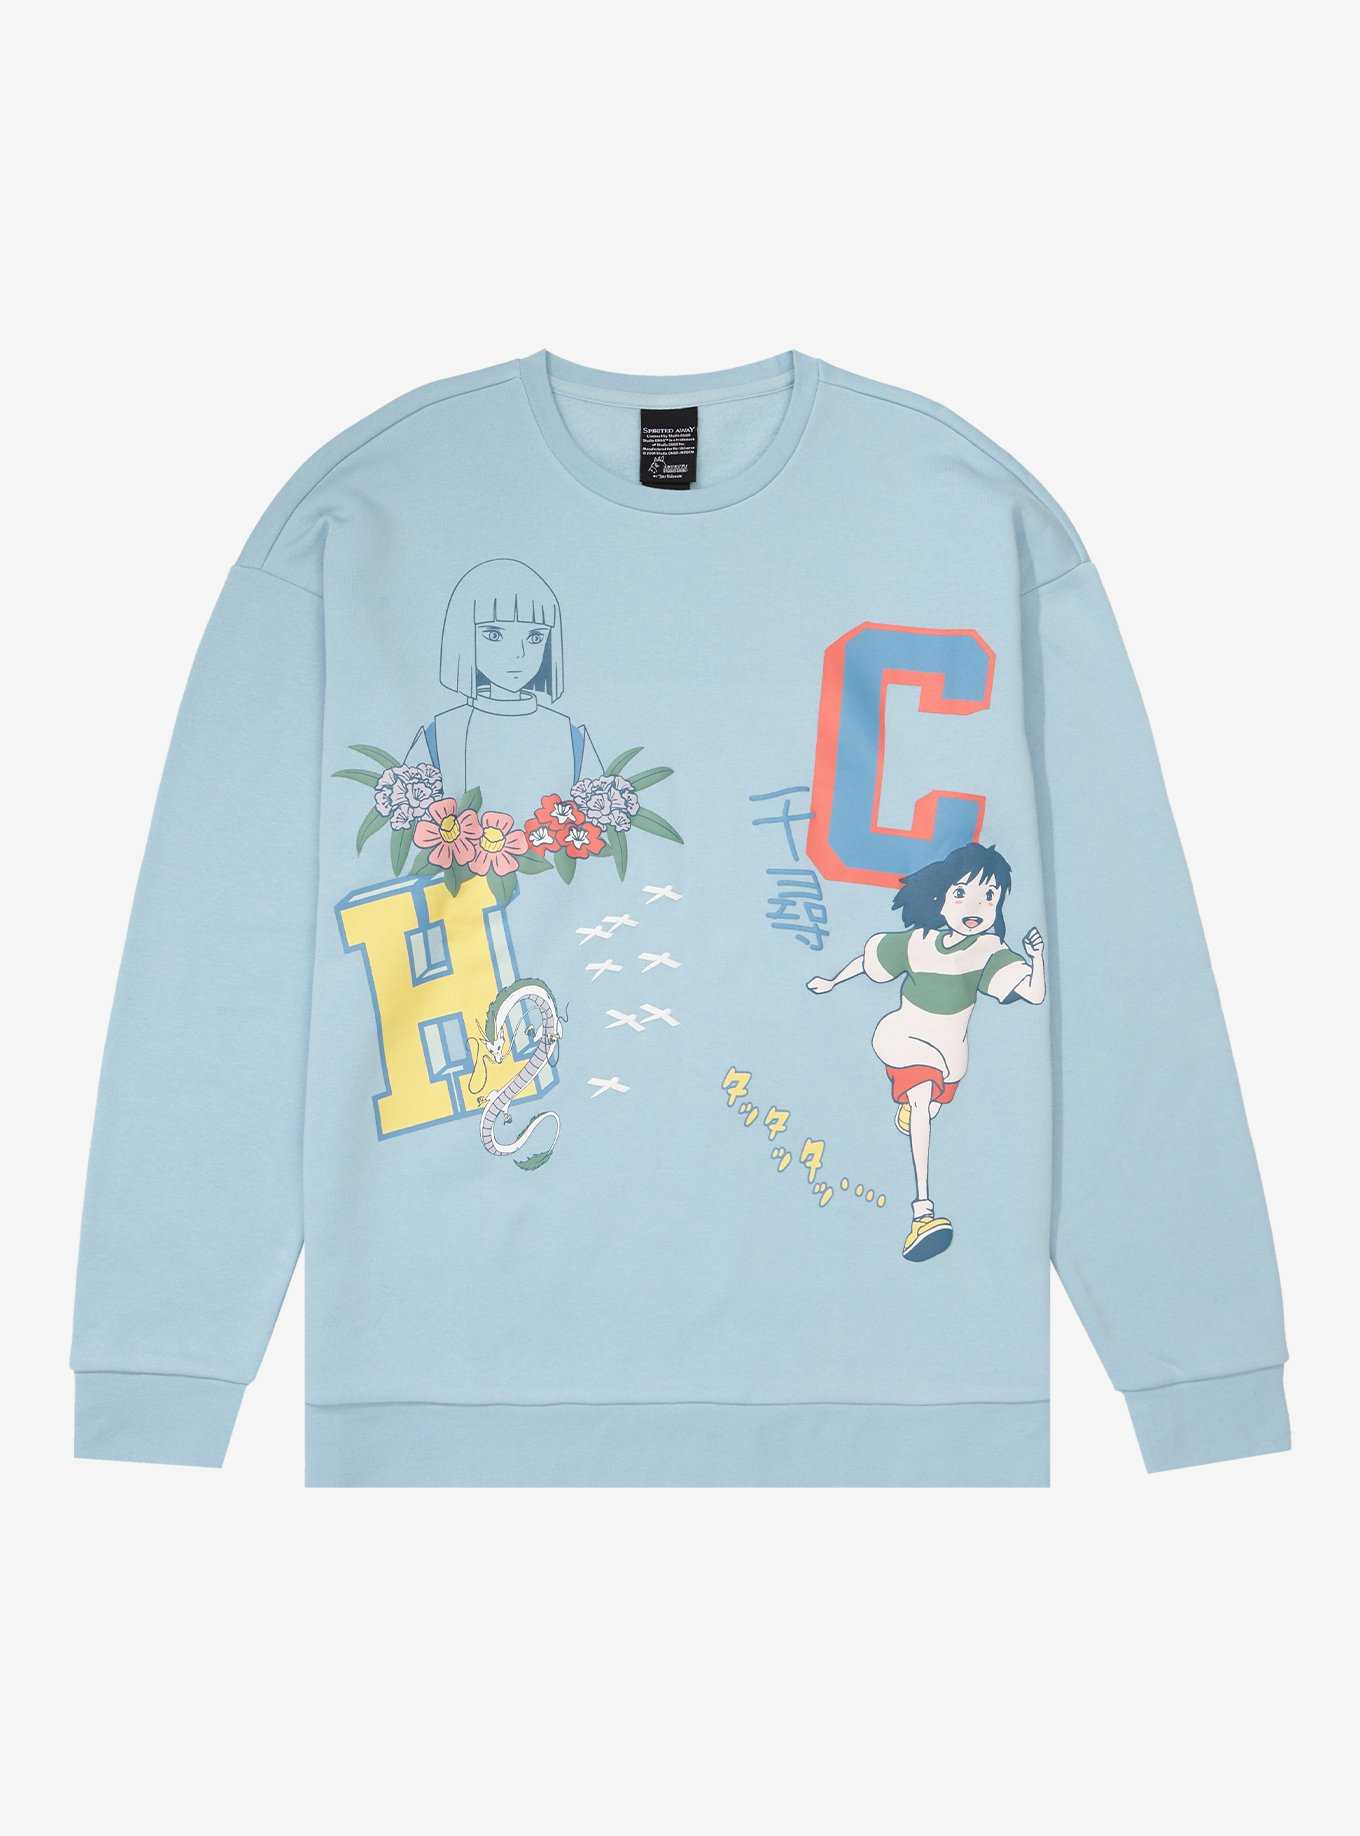 Studio Ghibli Spirited Away Haku and Chihiro Tonal Letters Sweatshirt, , hi-res